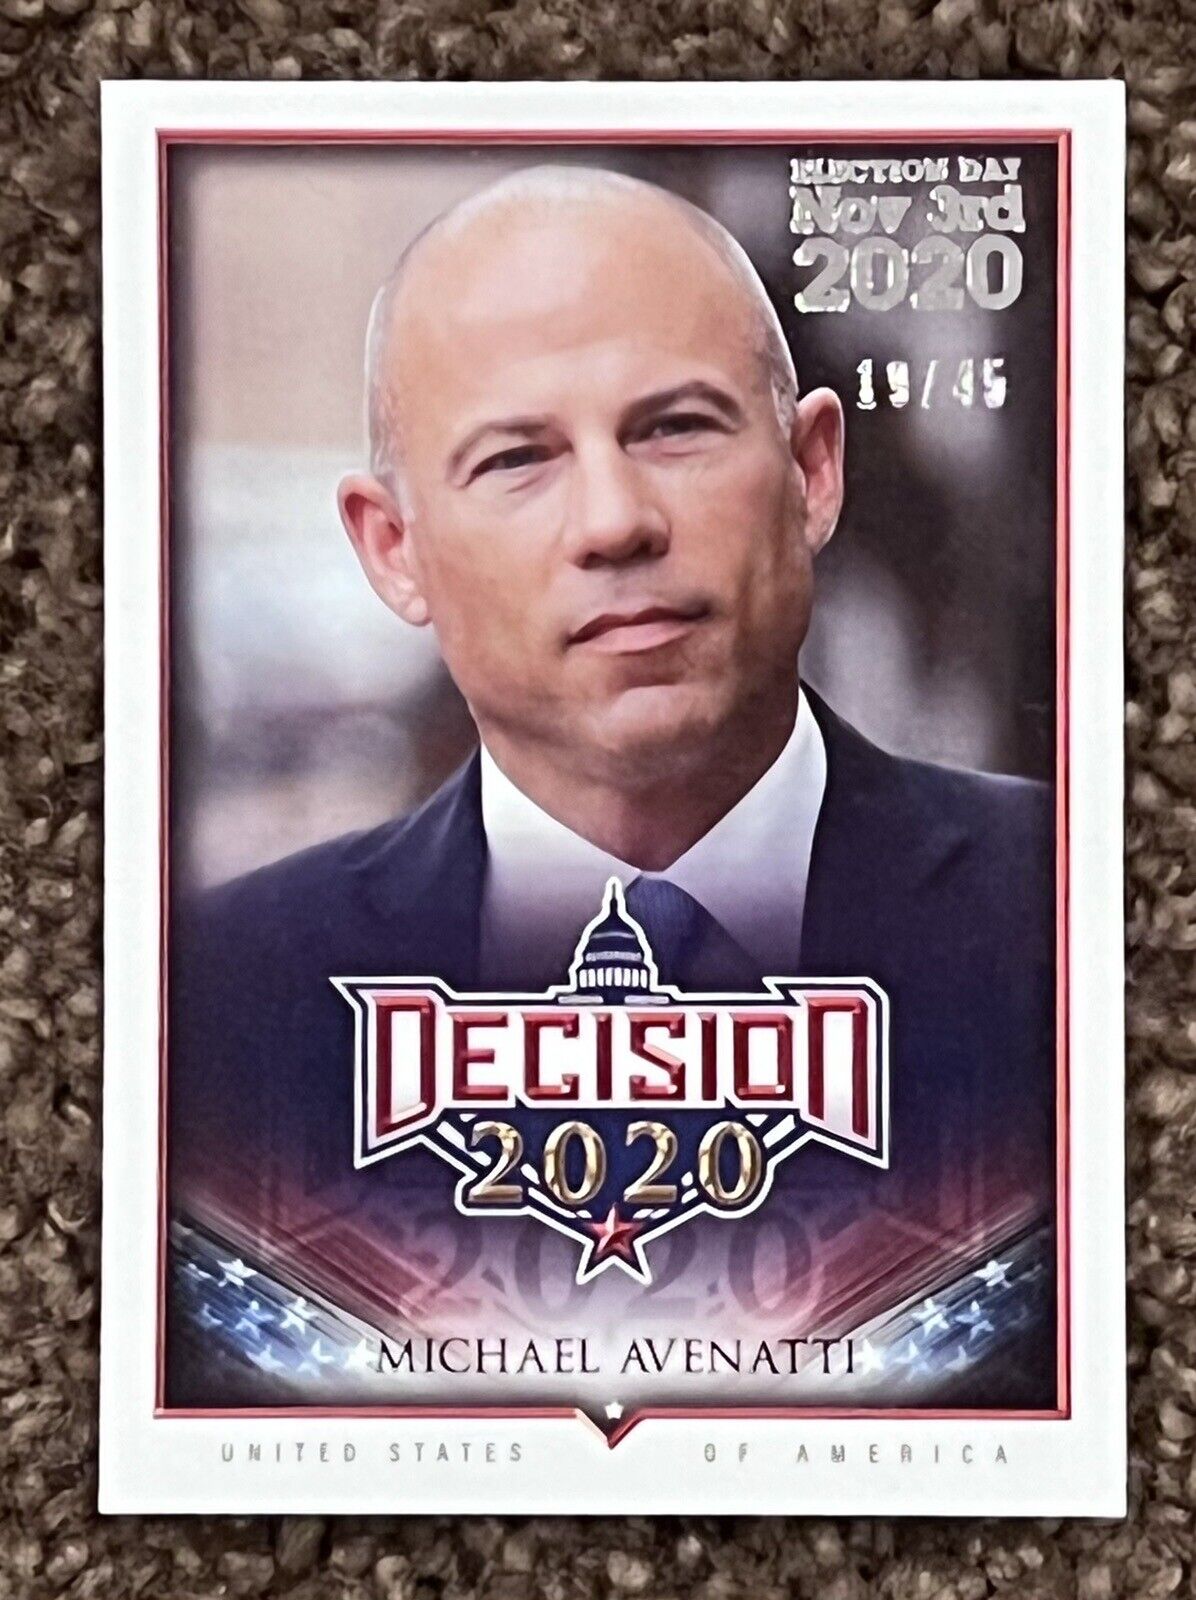 MICHAEL AVENATTI 2020 DECISION STORMY DANIELS SILVER FOIL CARD 504  19/45